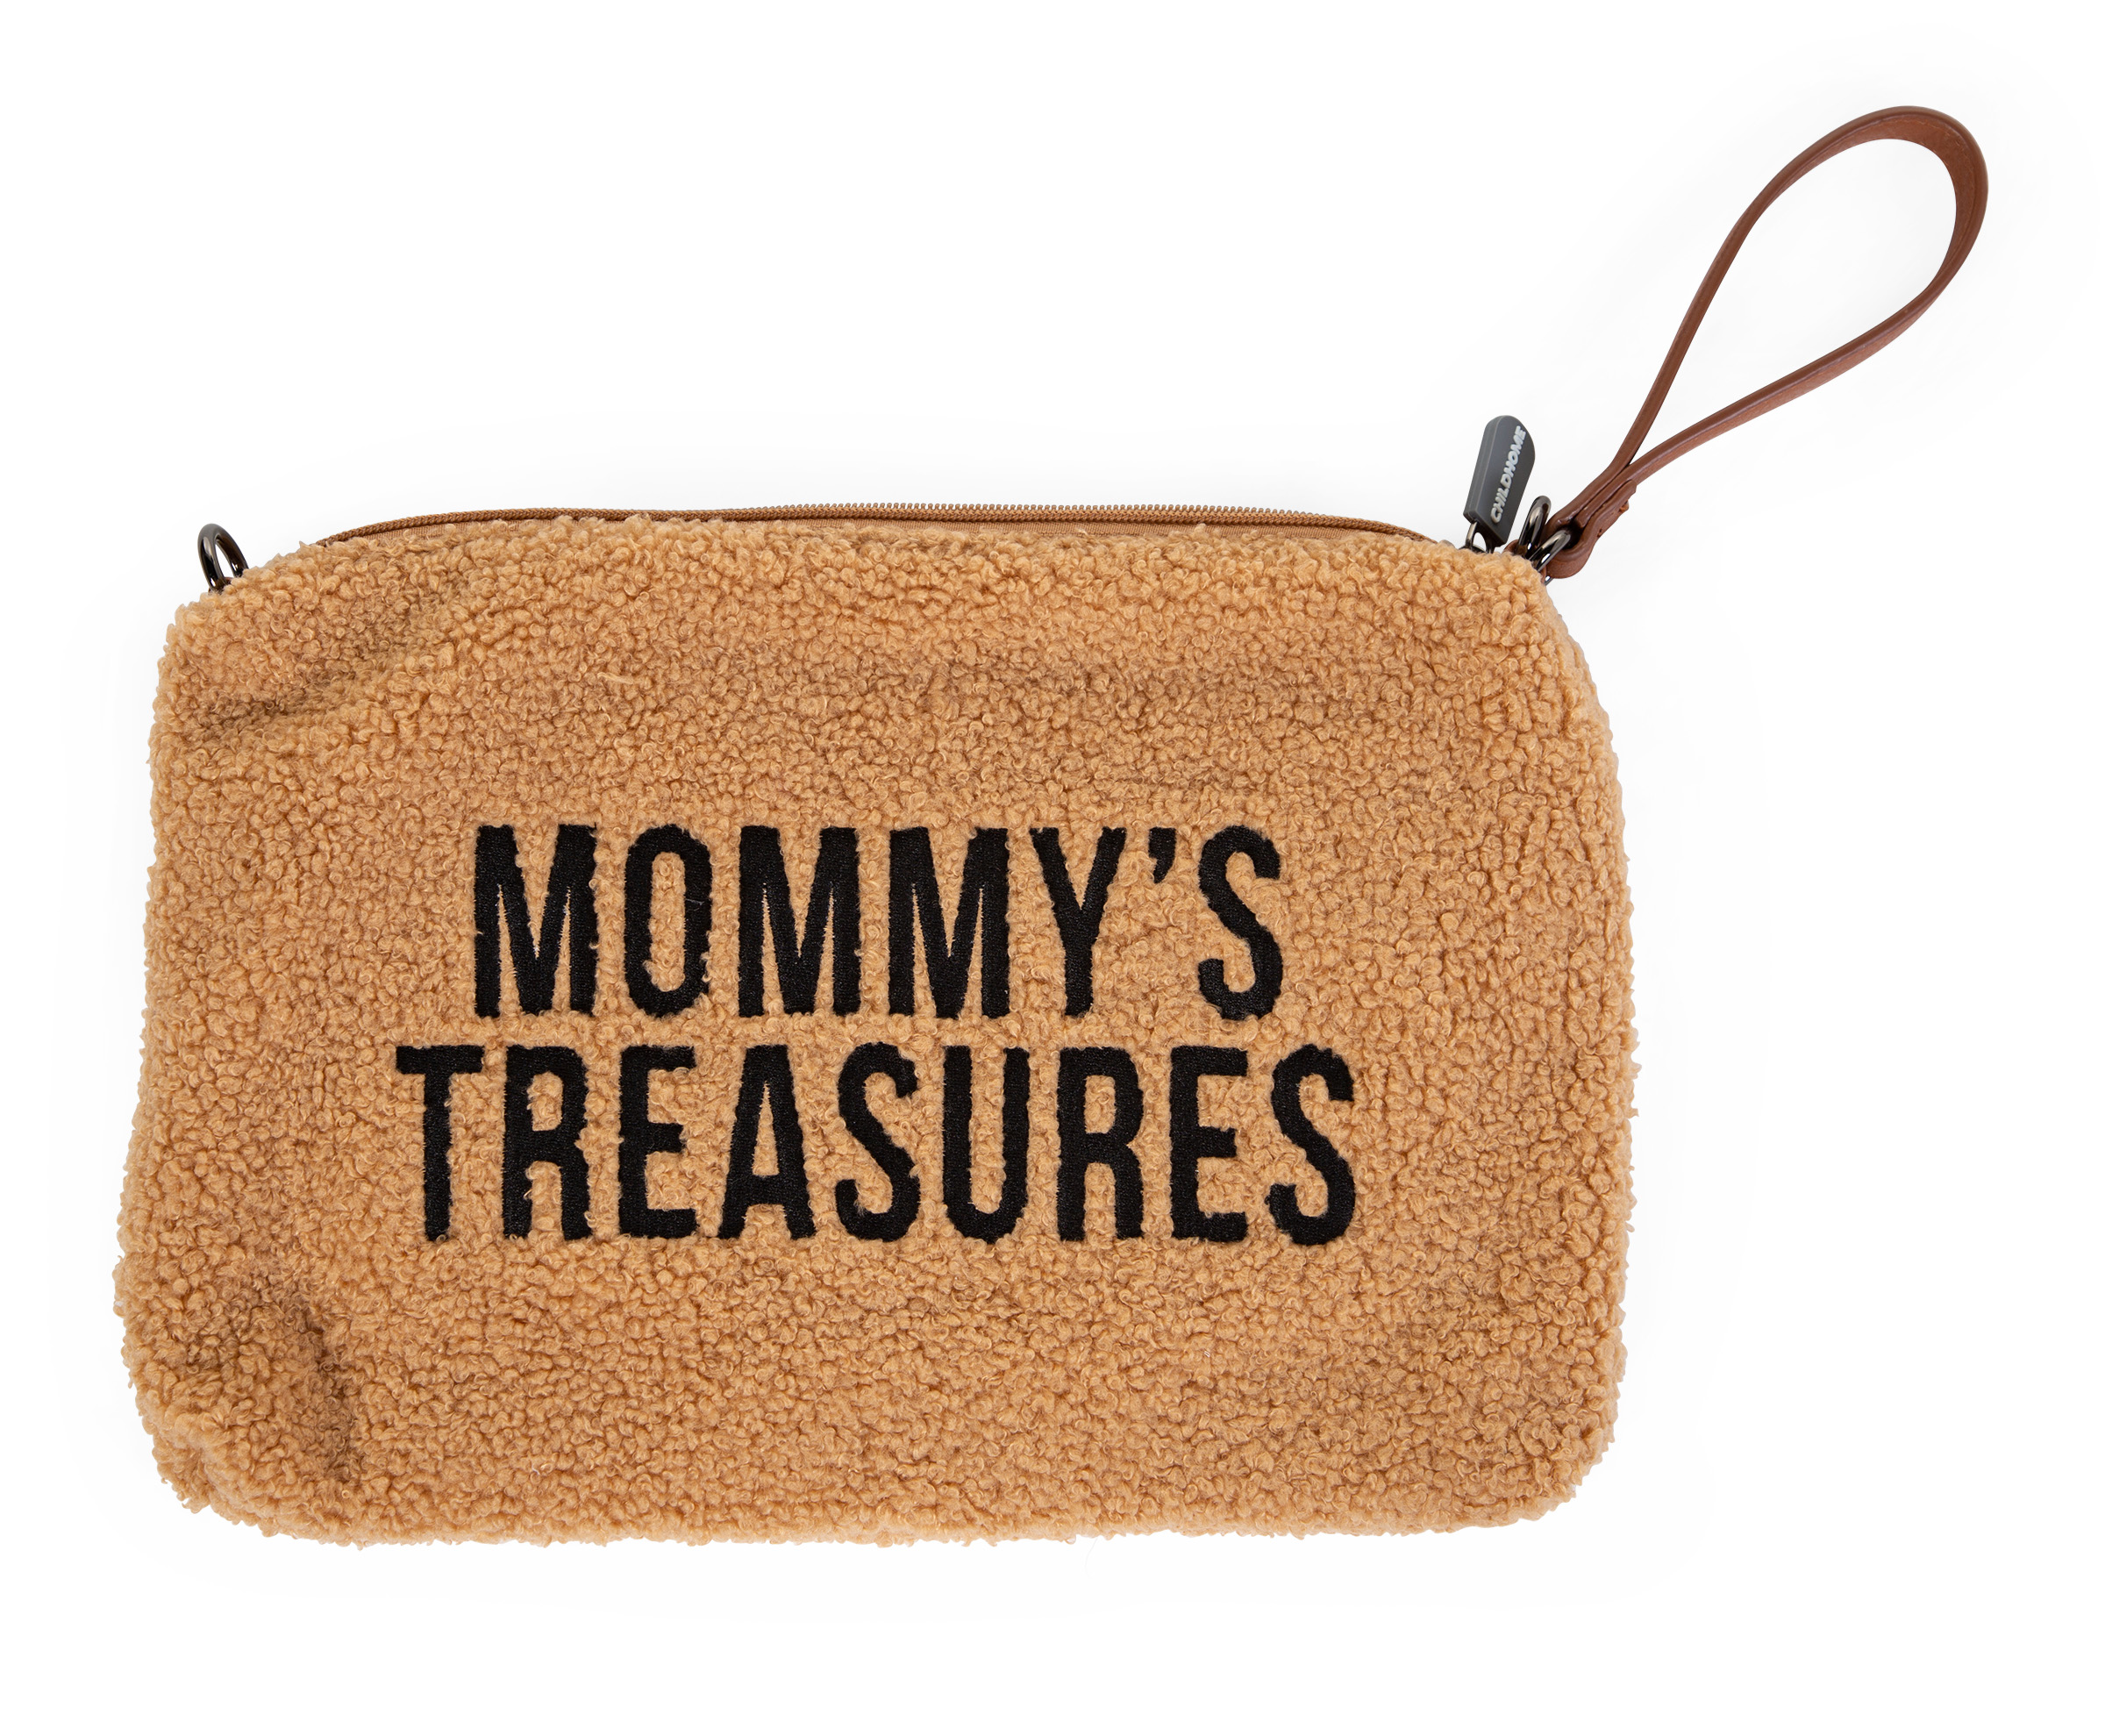 Mommy's Treasures Clutch - Teddy Brun